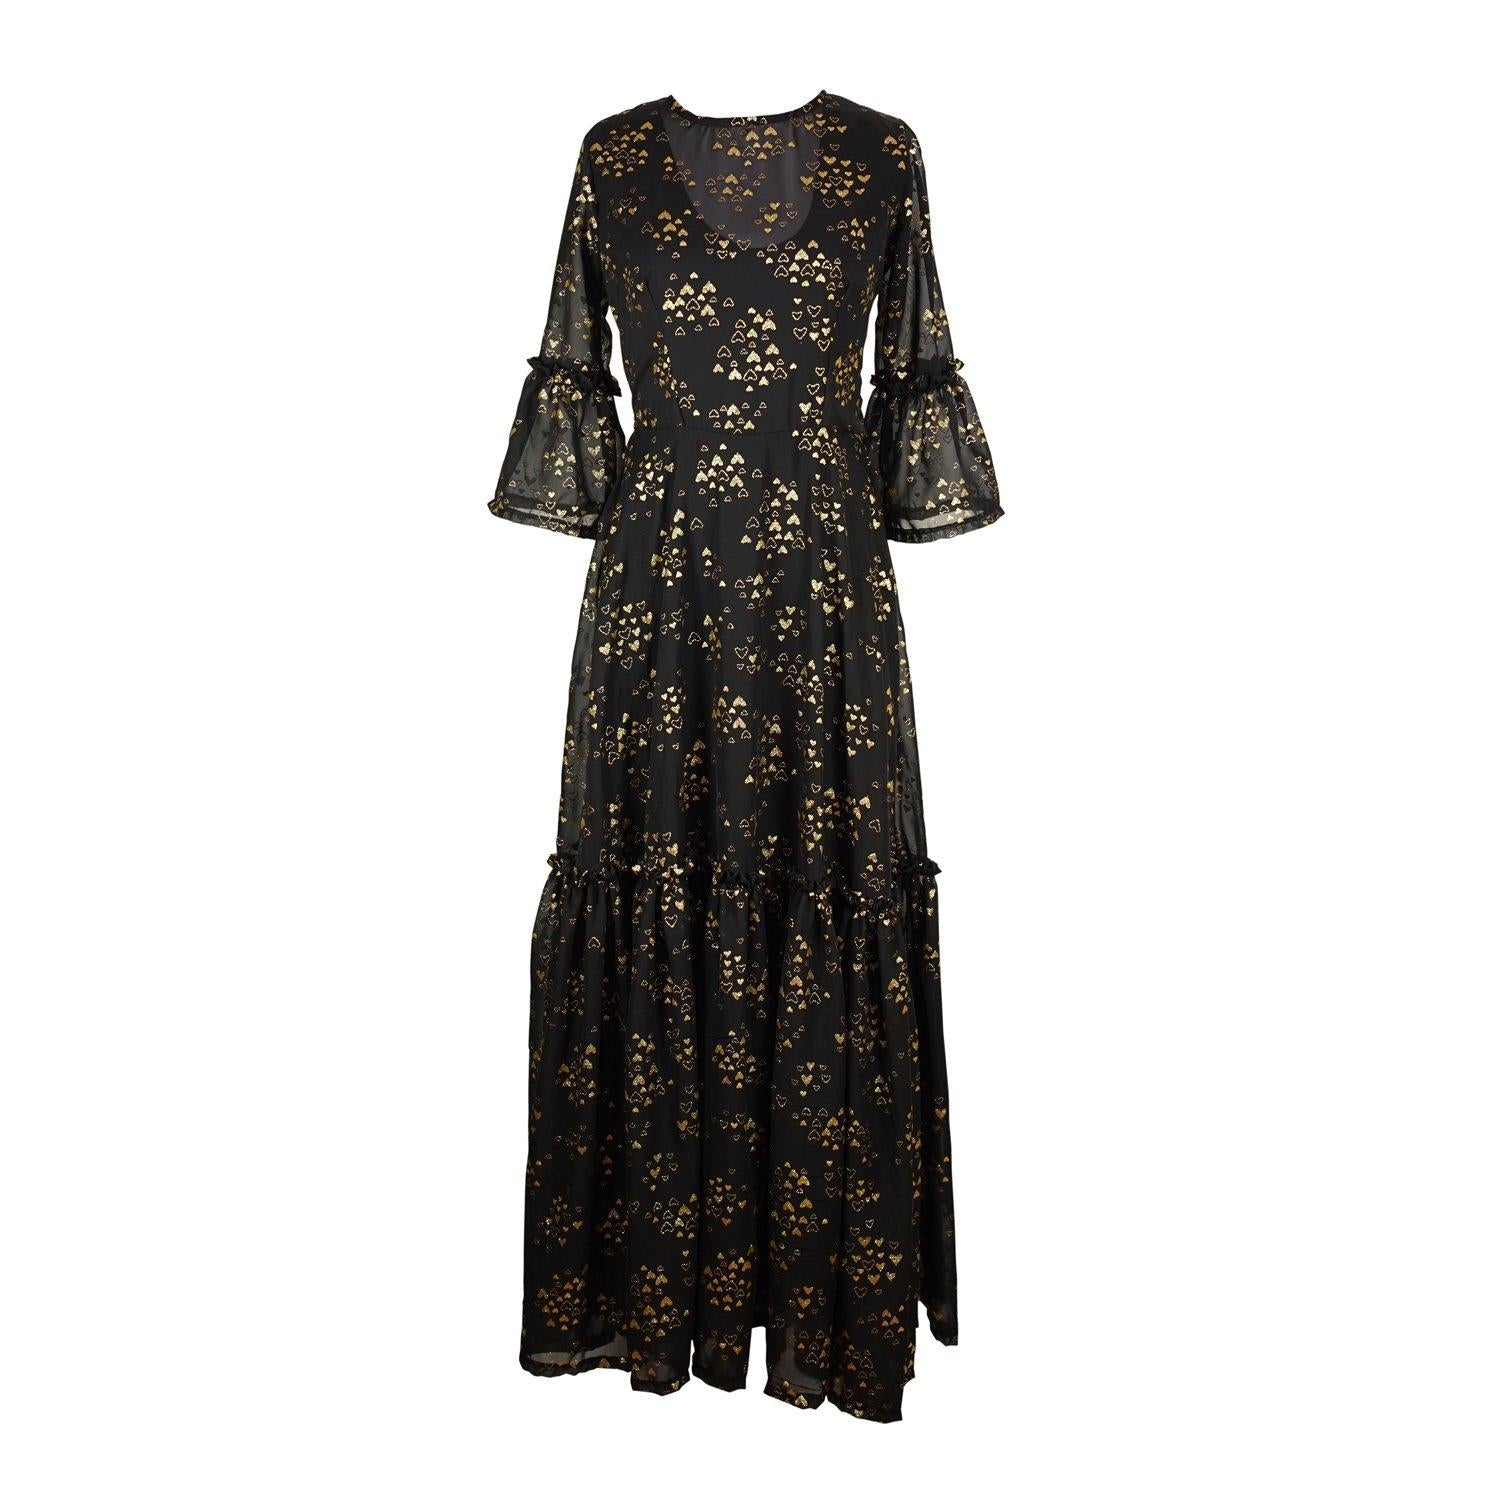 jennafer grace heart of gold ruffle dress evening gown tiered skirt black goth gothic boho bohemian hippie handmade